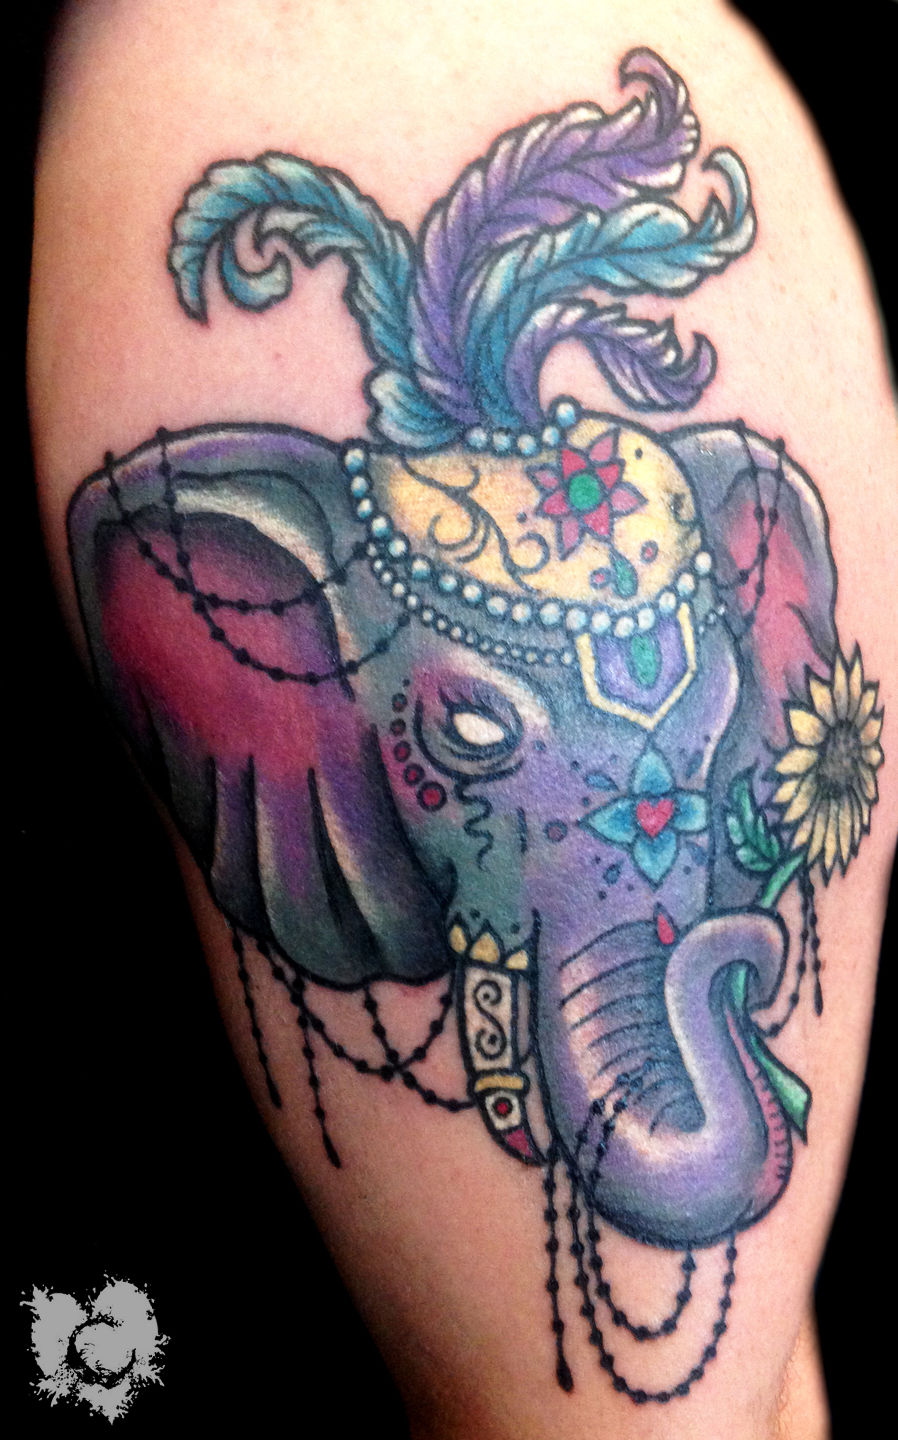 Circus Elephant Tattoo by kirtatas on DeviantArt